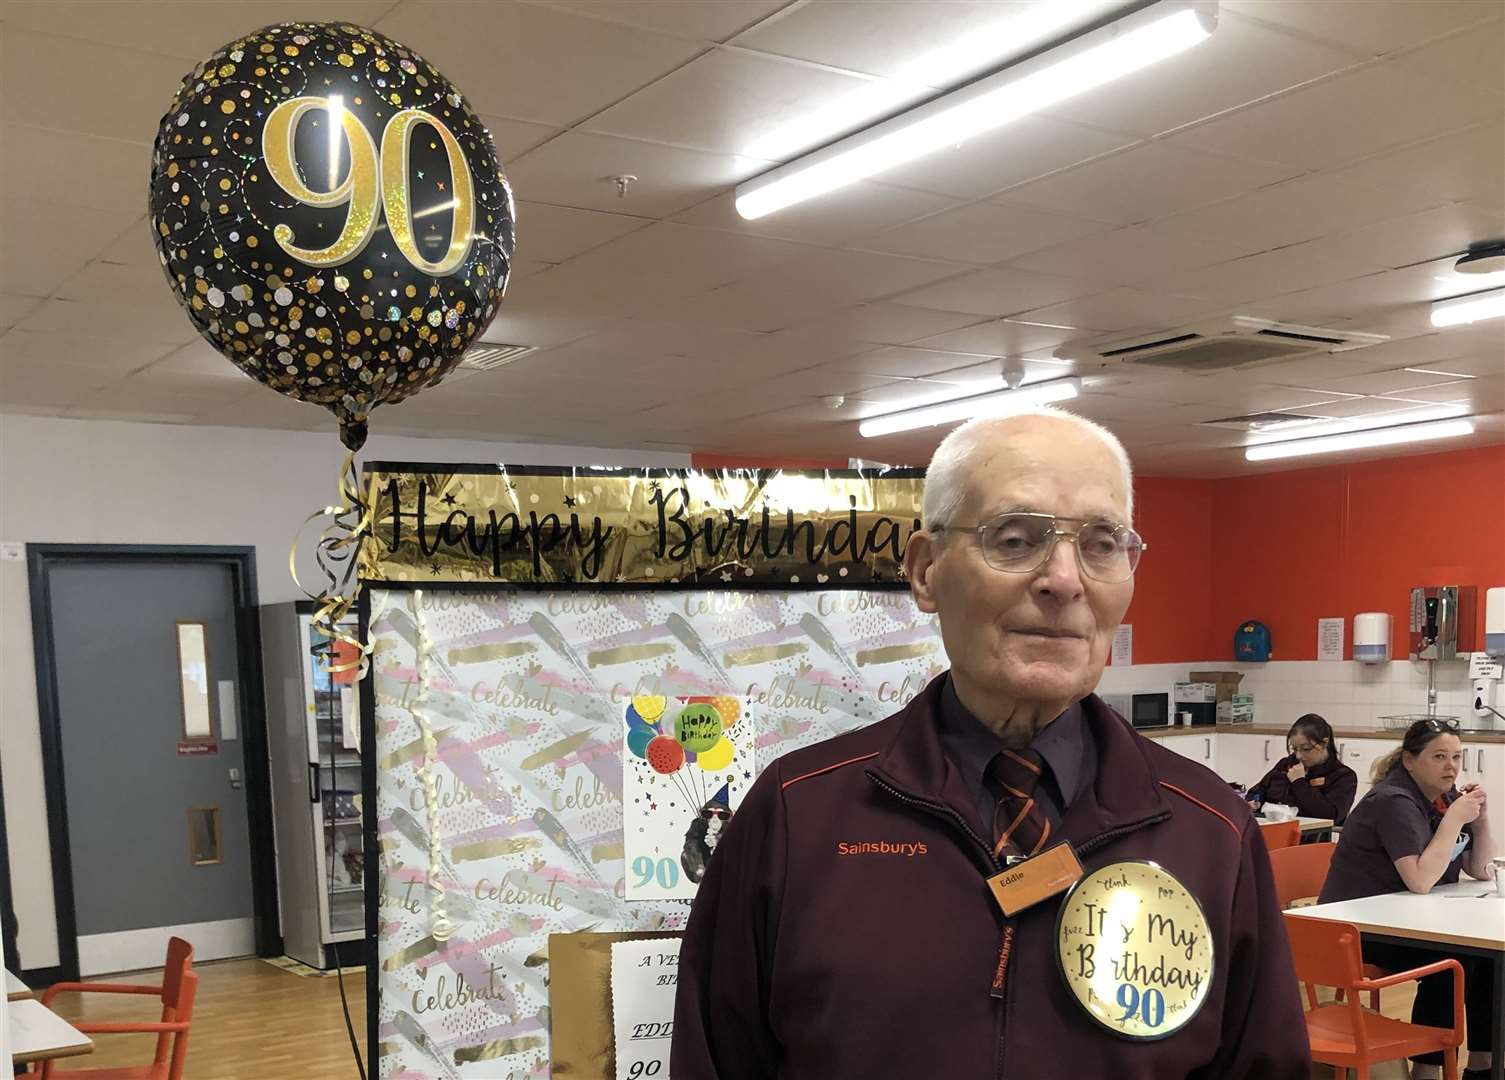 Eddie Swan celebrated turning 90 at Sainsbury's